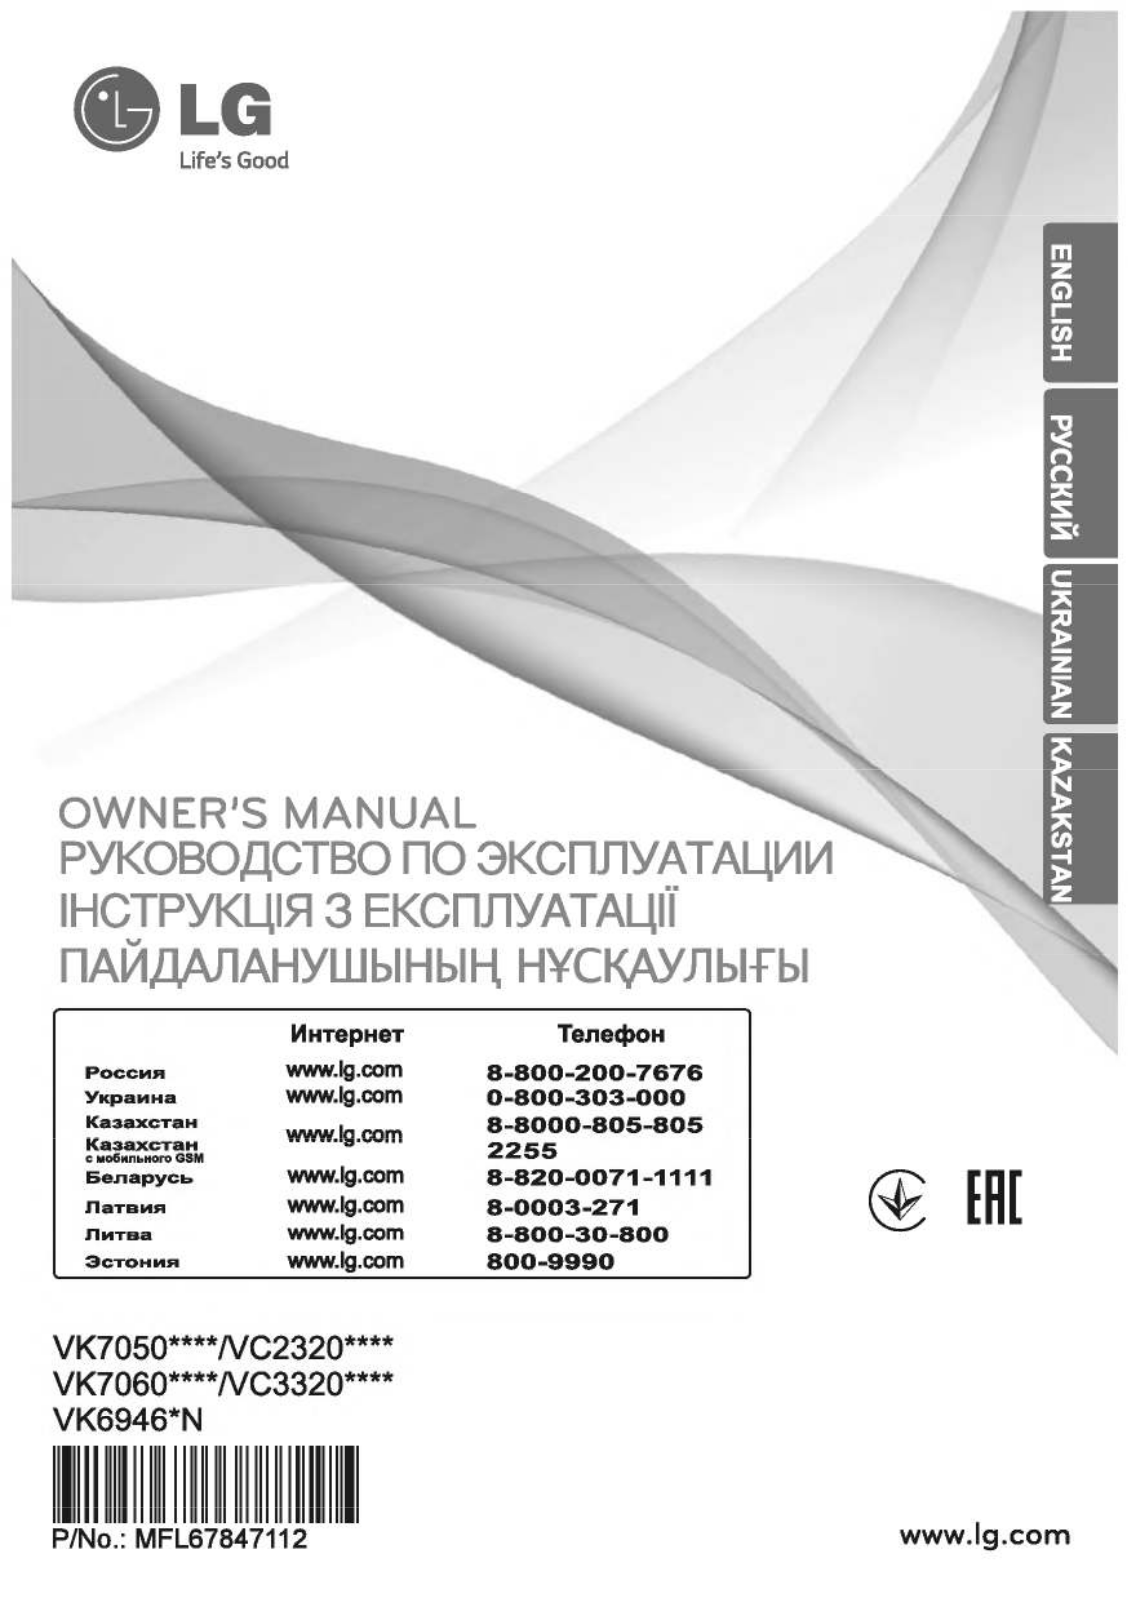 LG VK69461N User Manual